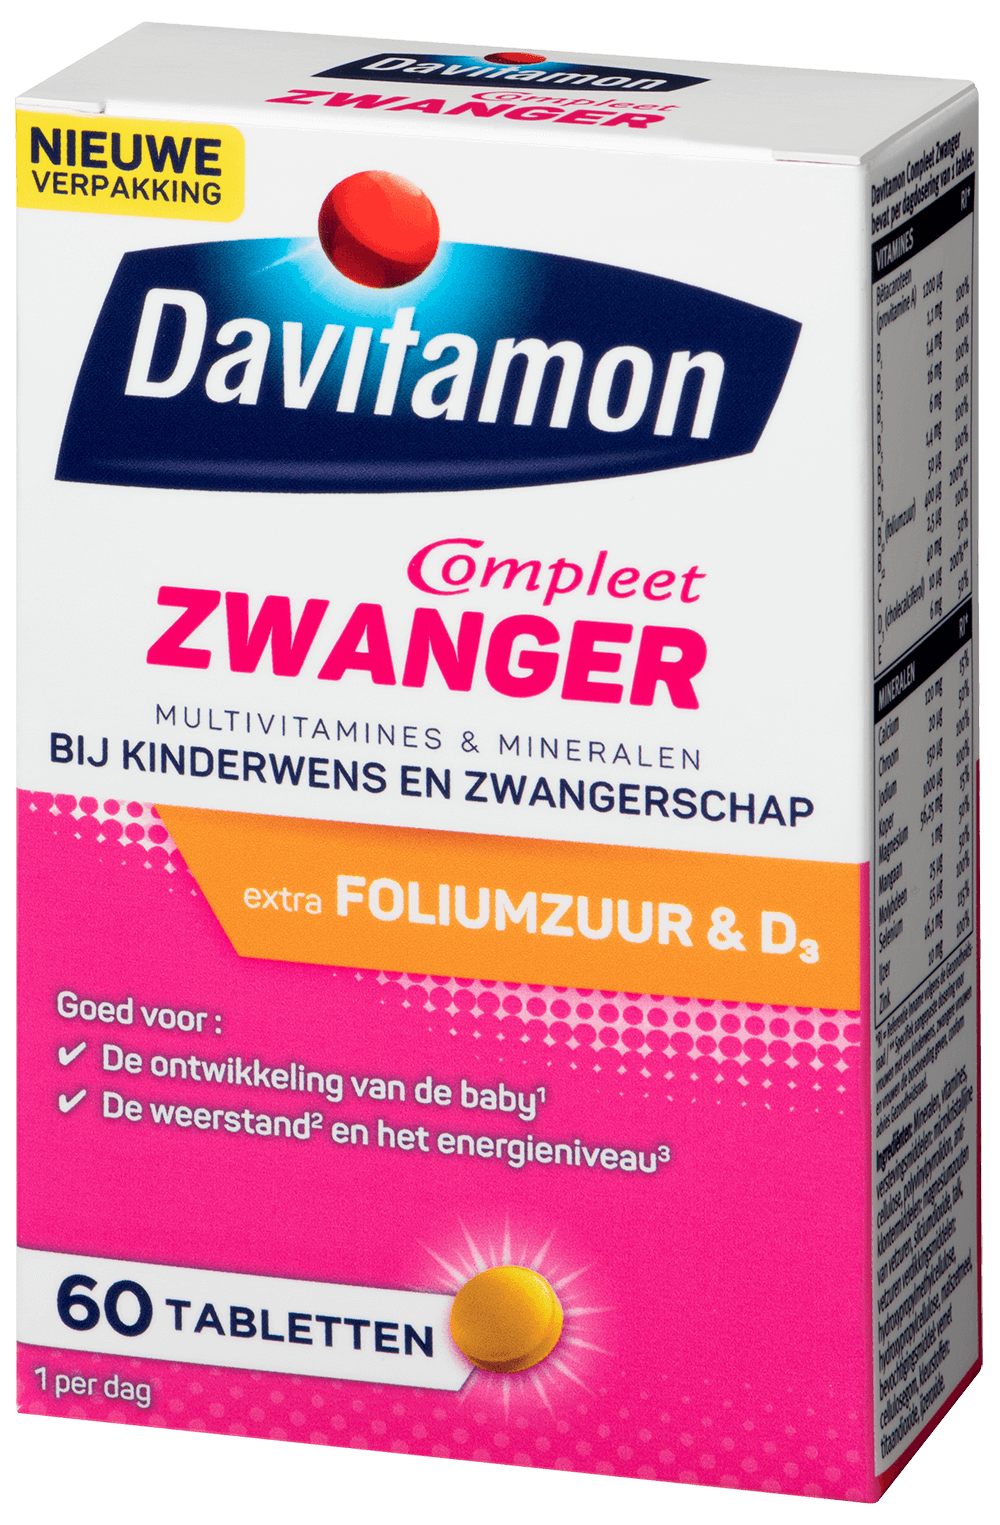 Foliumzuur (vitamine B11): hier zit het Davitamon